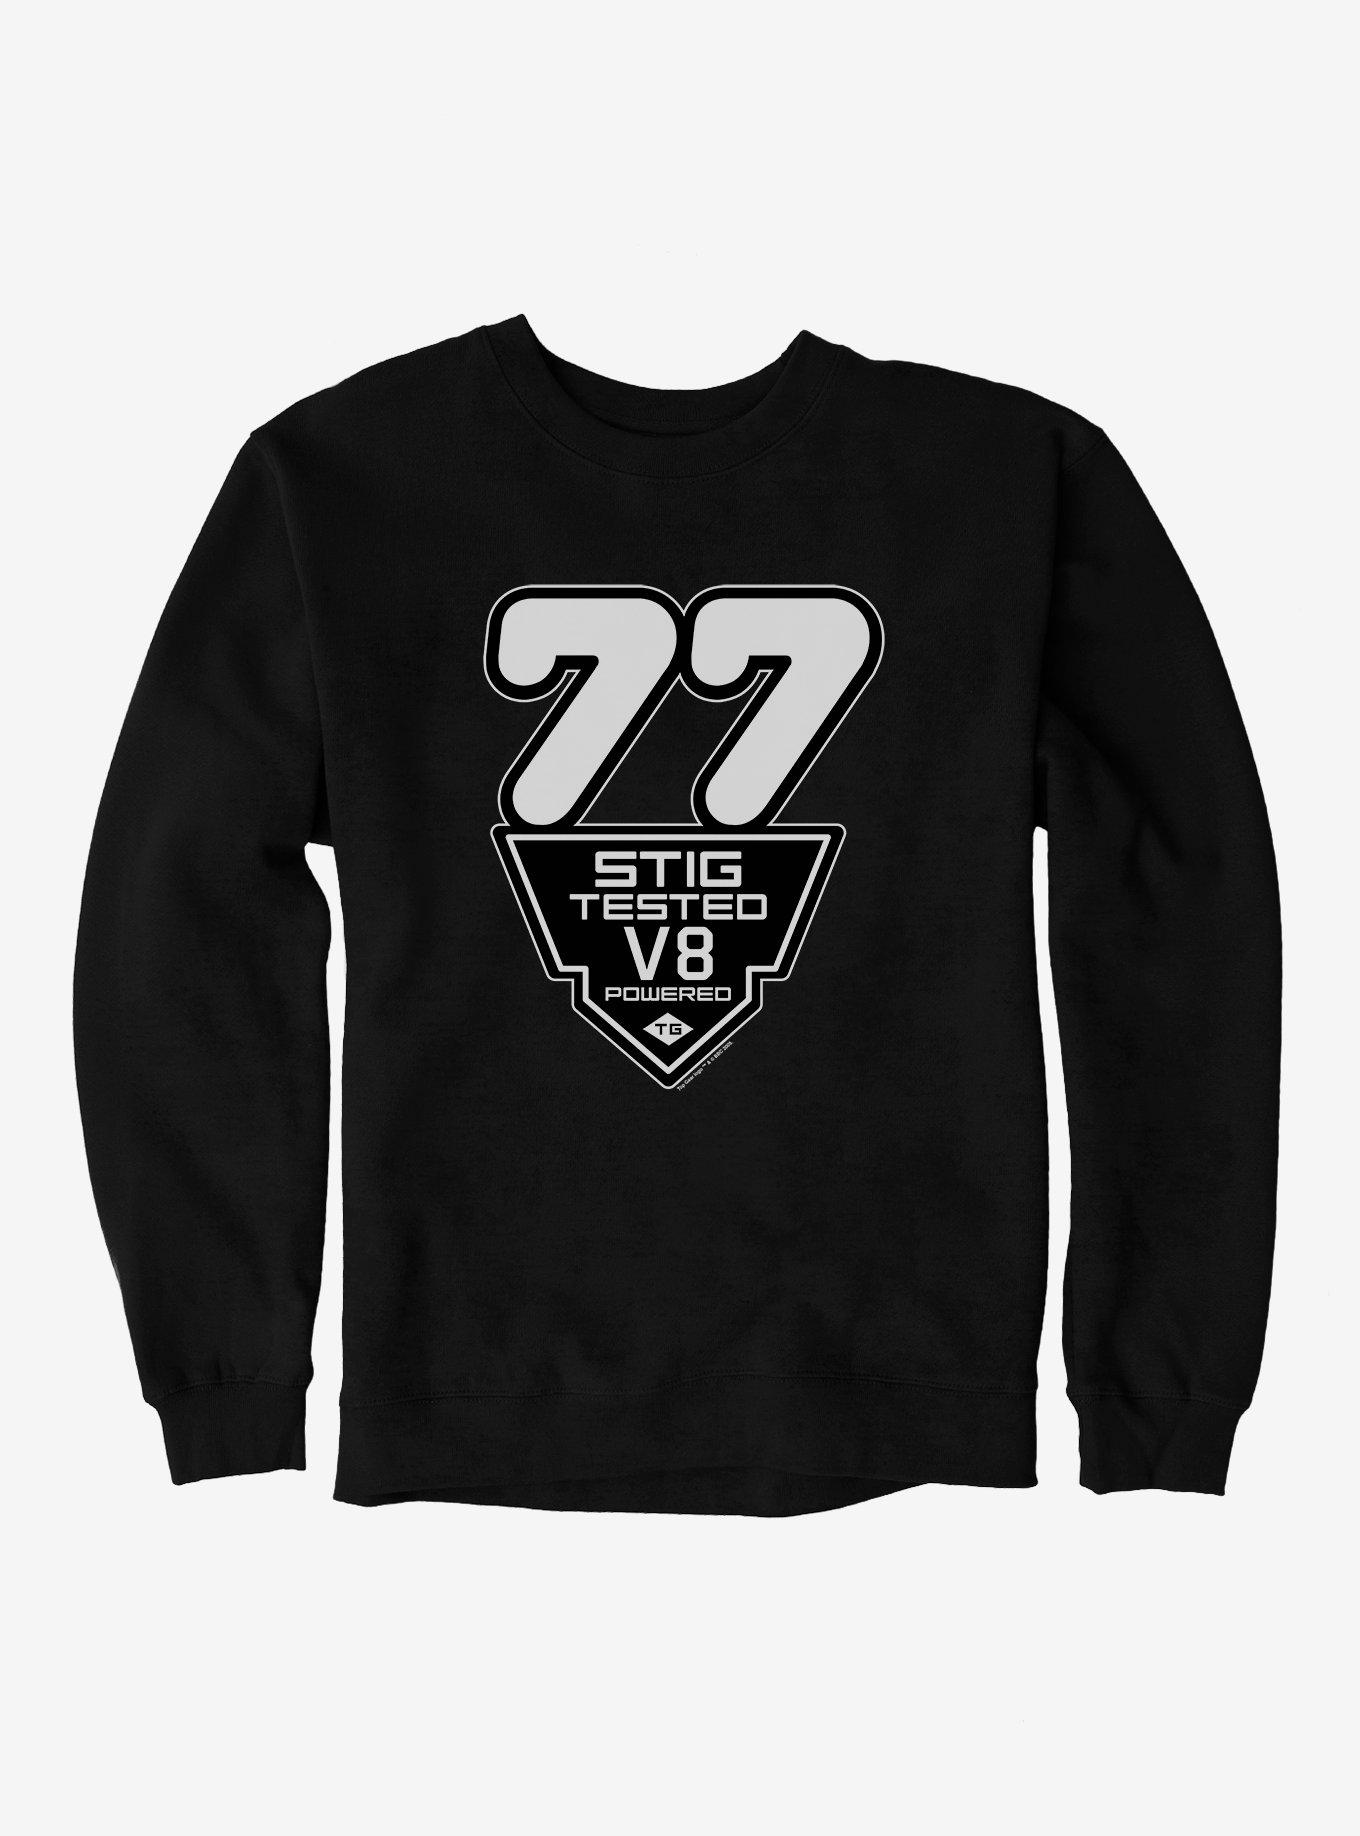 Top Gear Stig 77 Sweatshirt